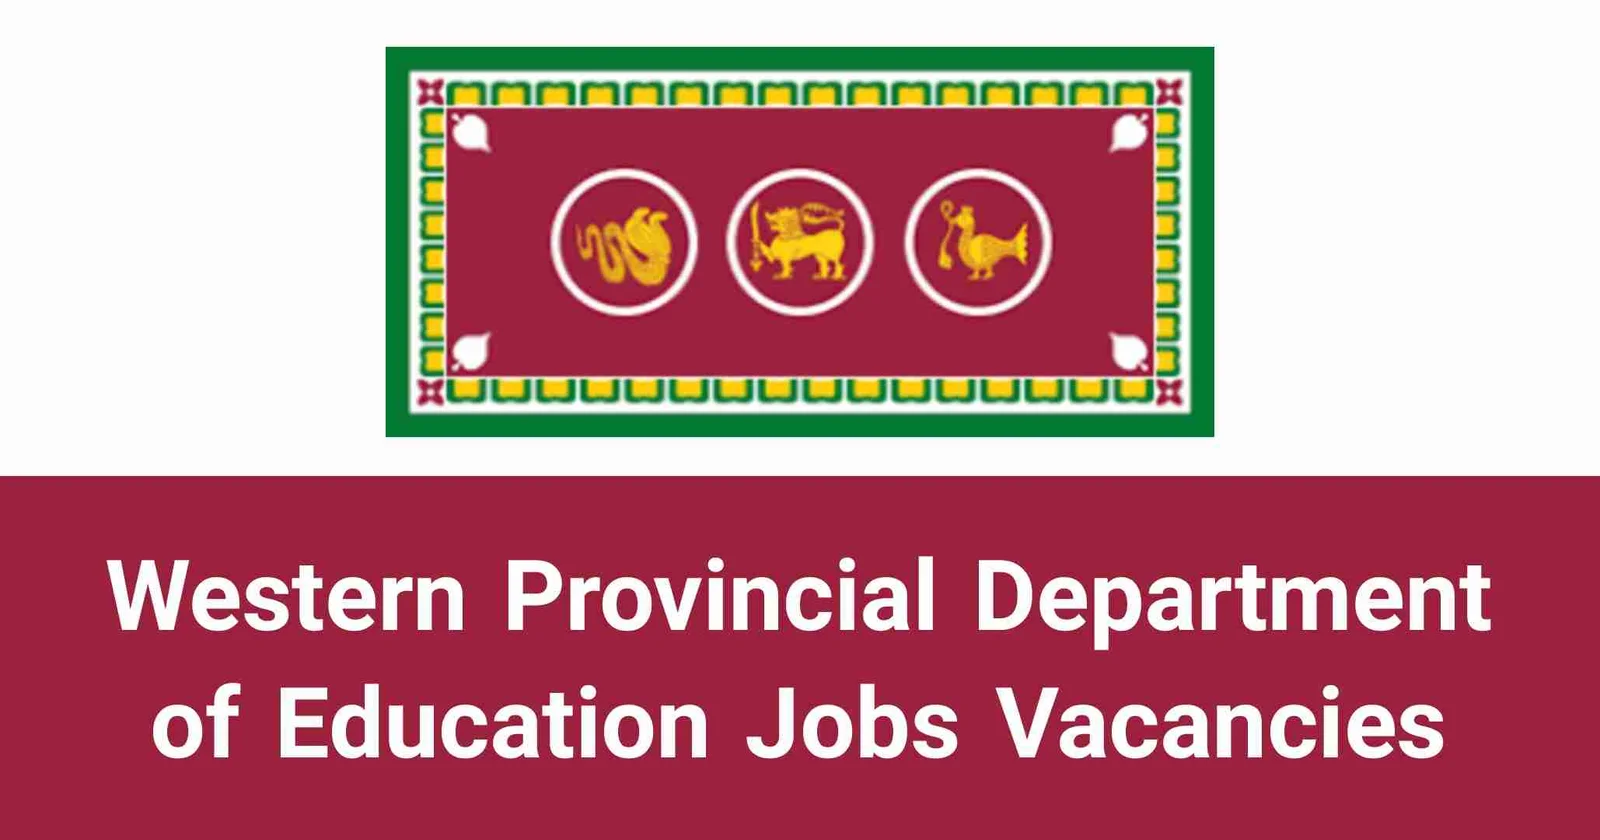 Western Provincial Department of Education Jobs Vacancies